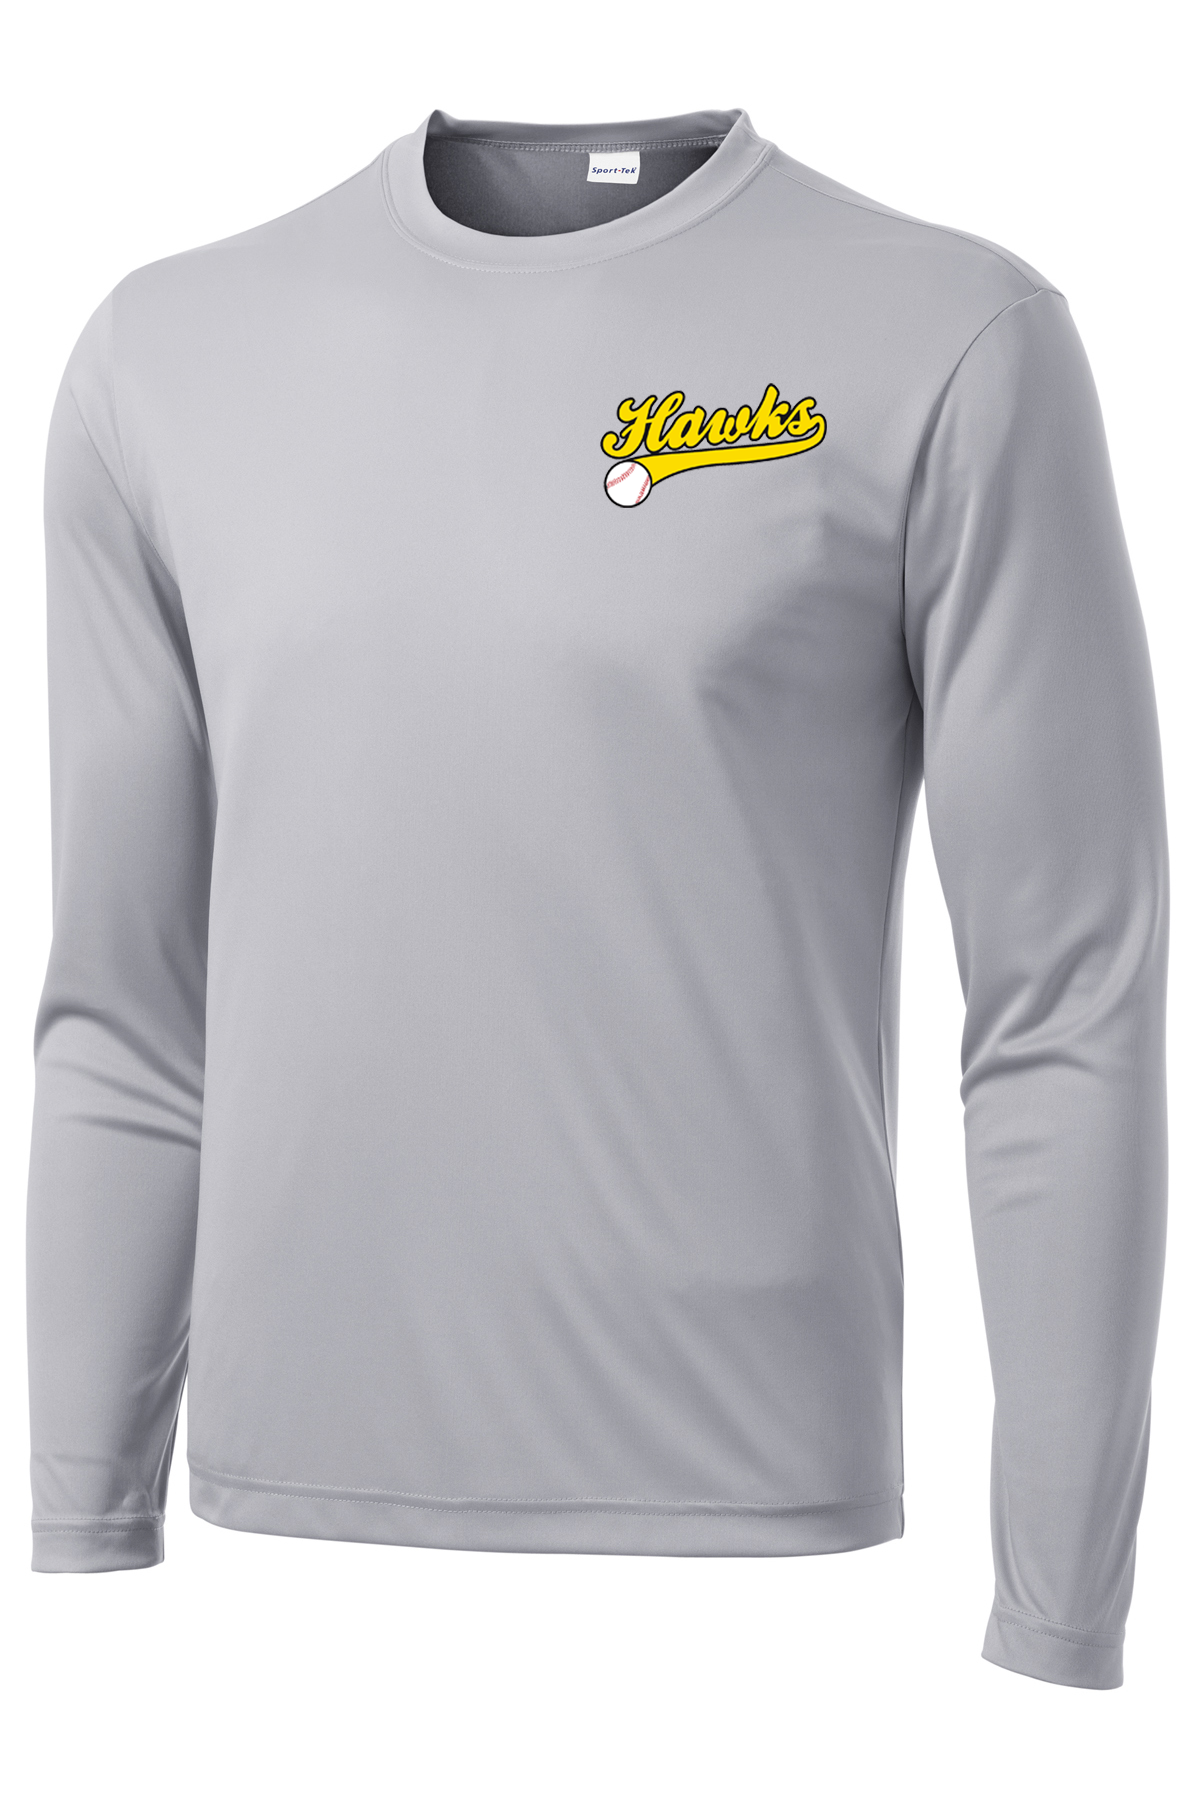 Hawks Baseball Long Sleeve Performance Shirt